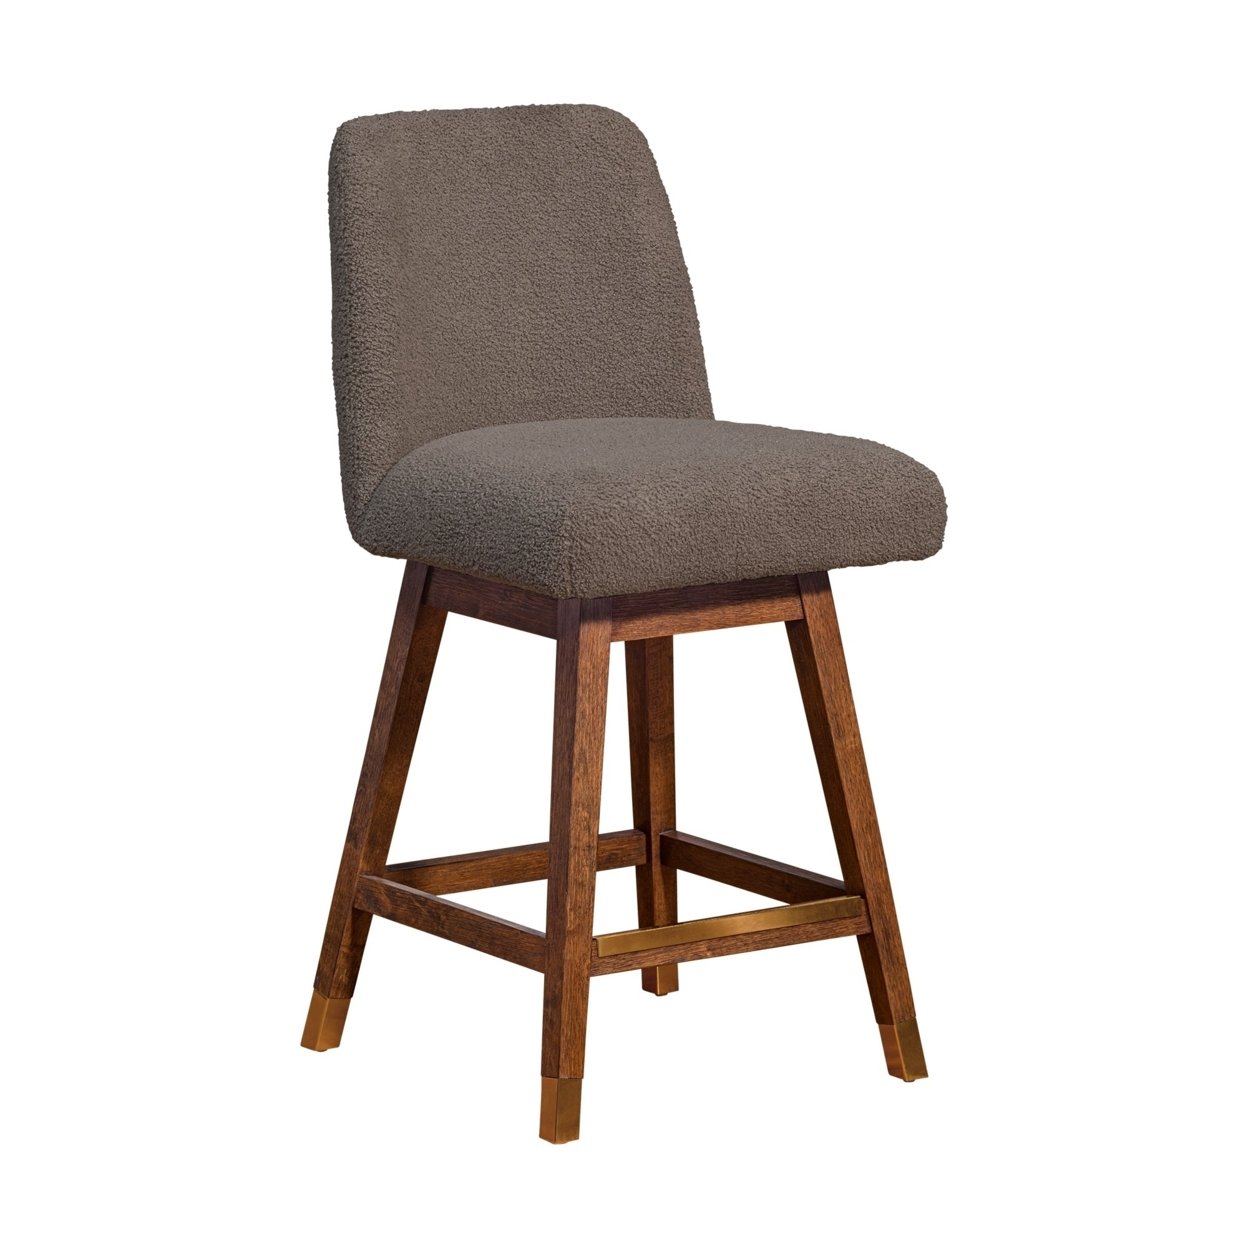 Lara 26 Inch Swivel Counter Stool Chair, Taupe Boucle, Brown Wood Legs- Saltoro Sherpi